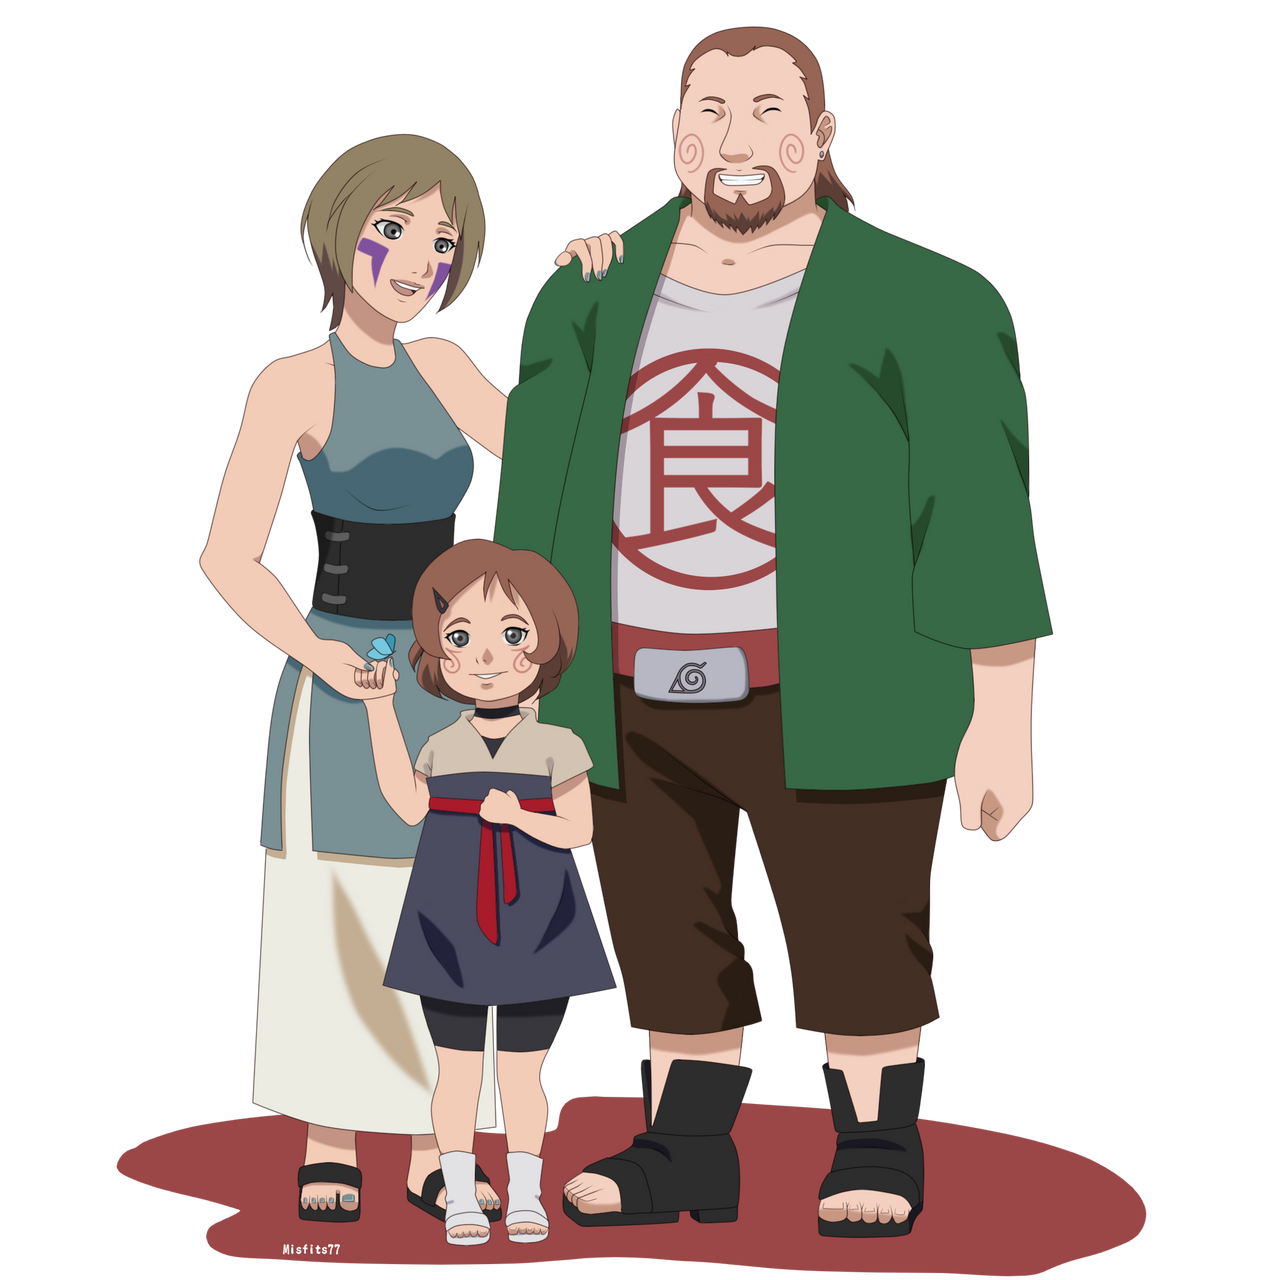 Akimichi Family by Misfits77 on DeviantArt